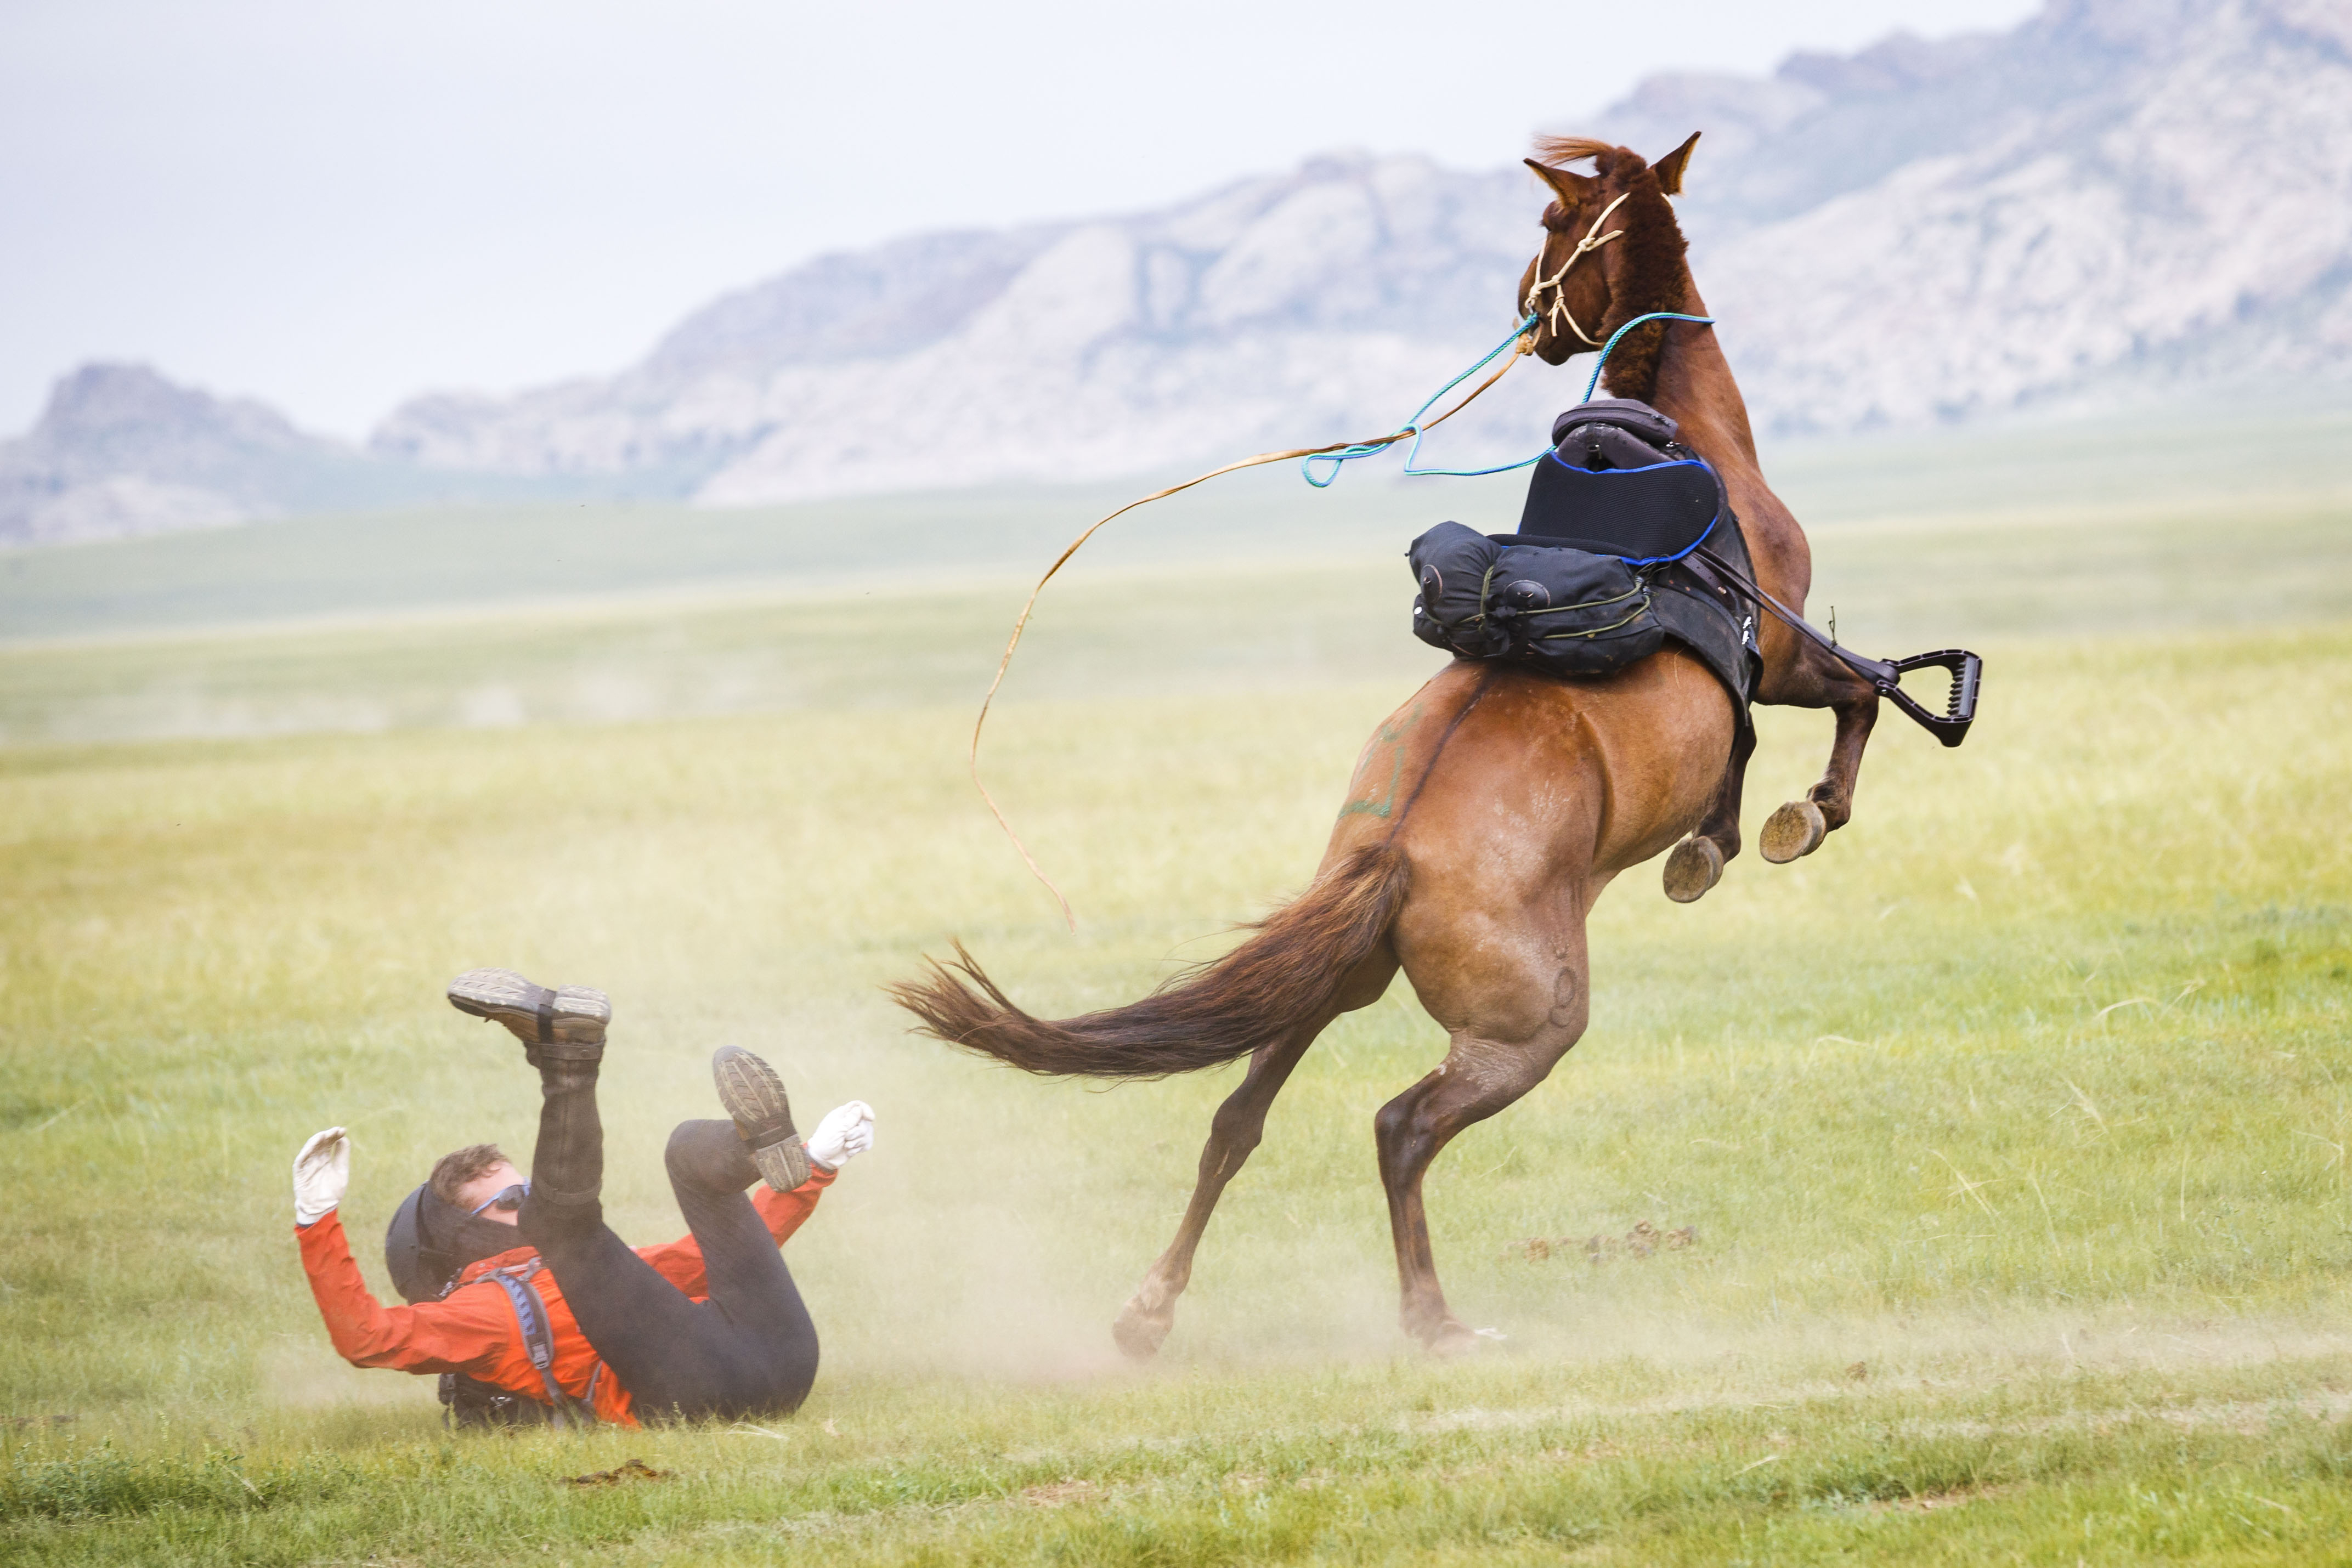 Mongol Derby bound: Poland woman to ride 28 semi-wild horses 620 ...